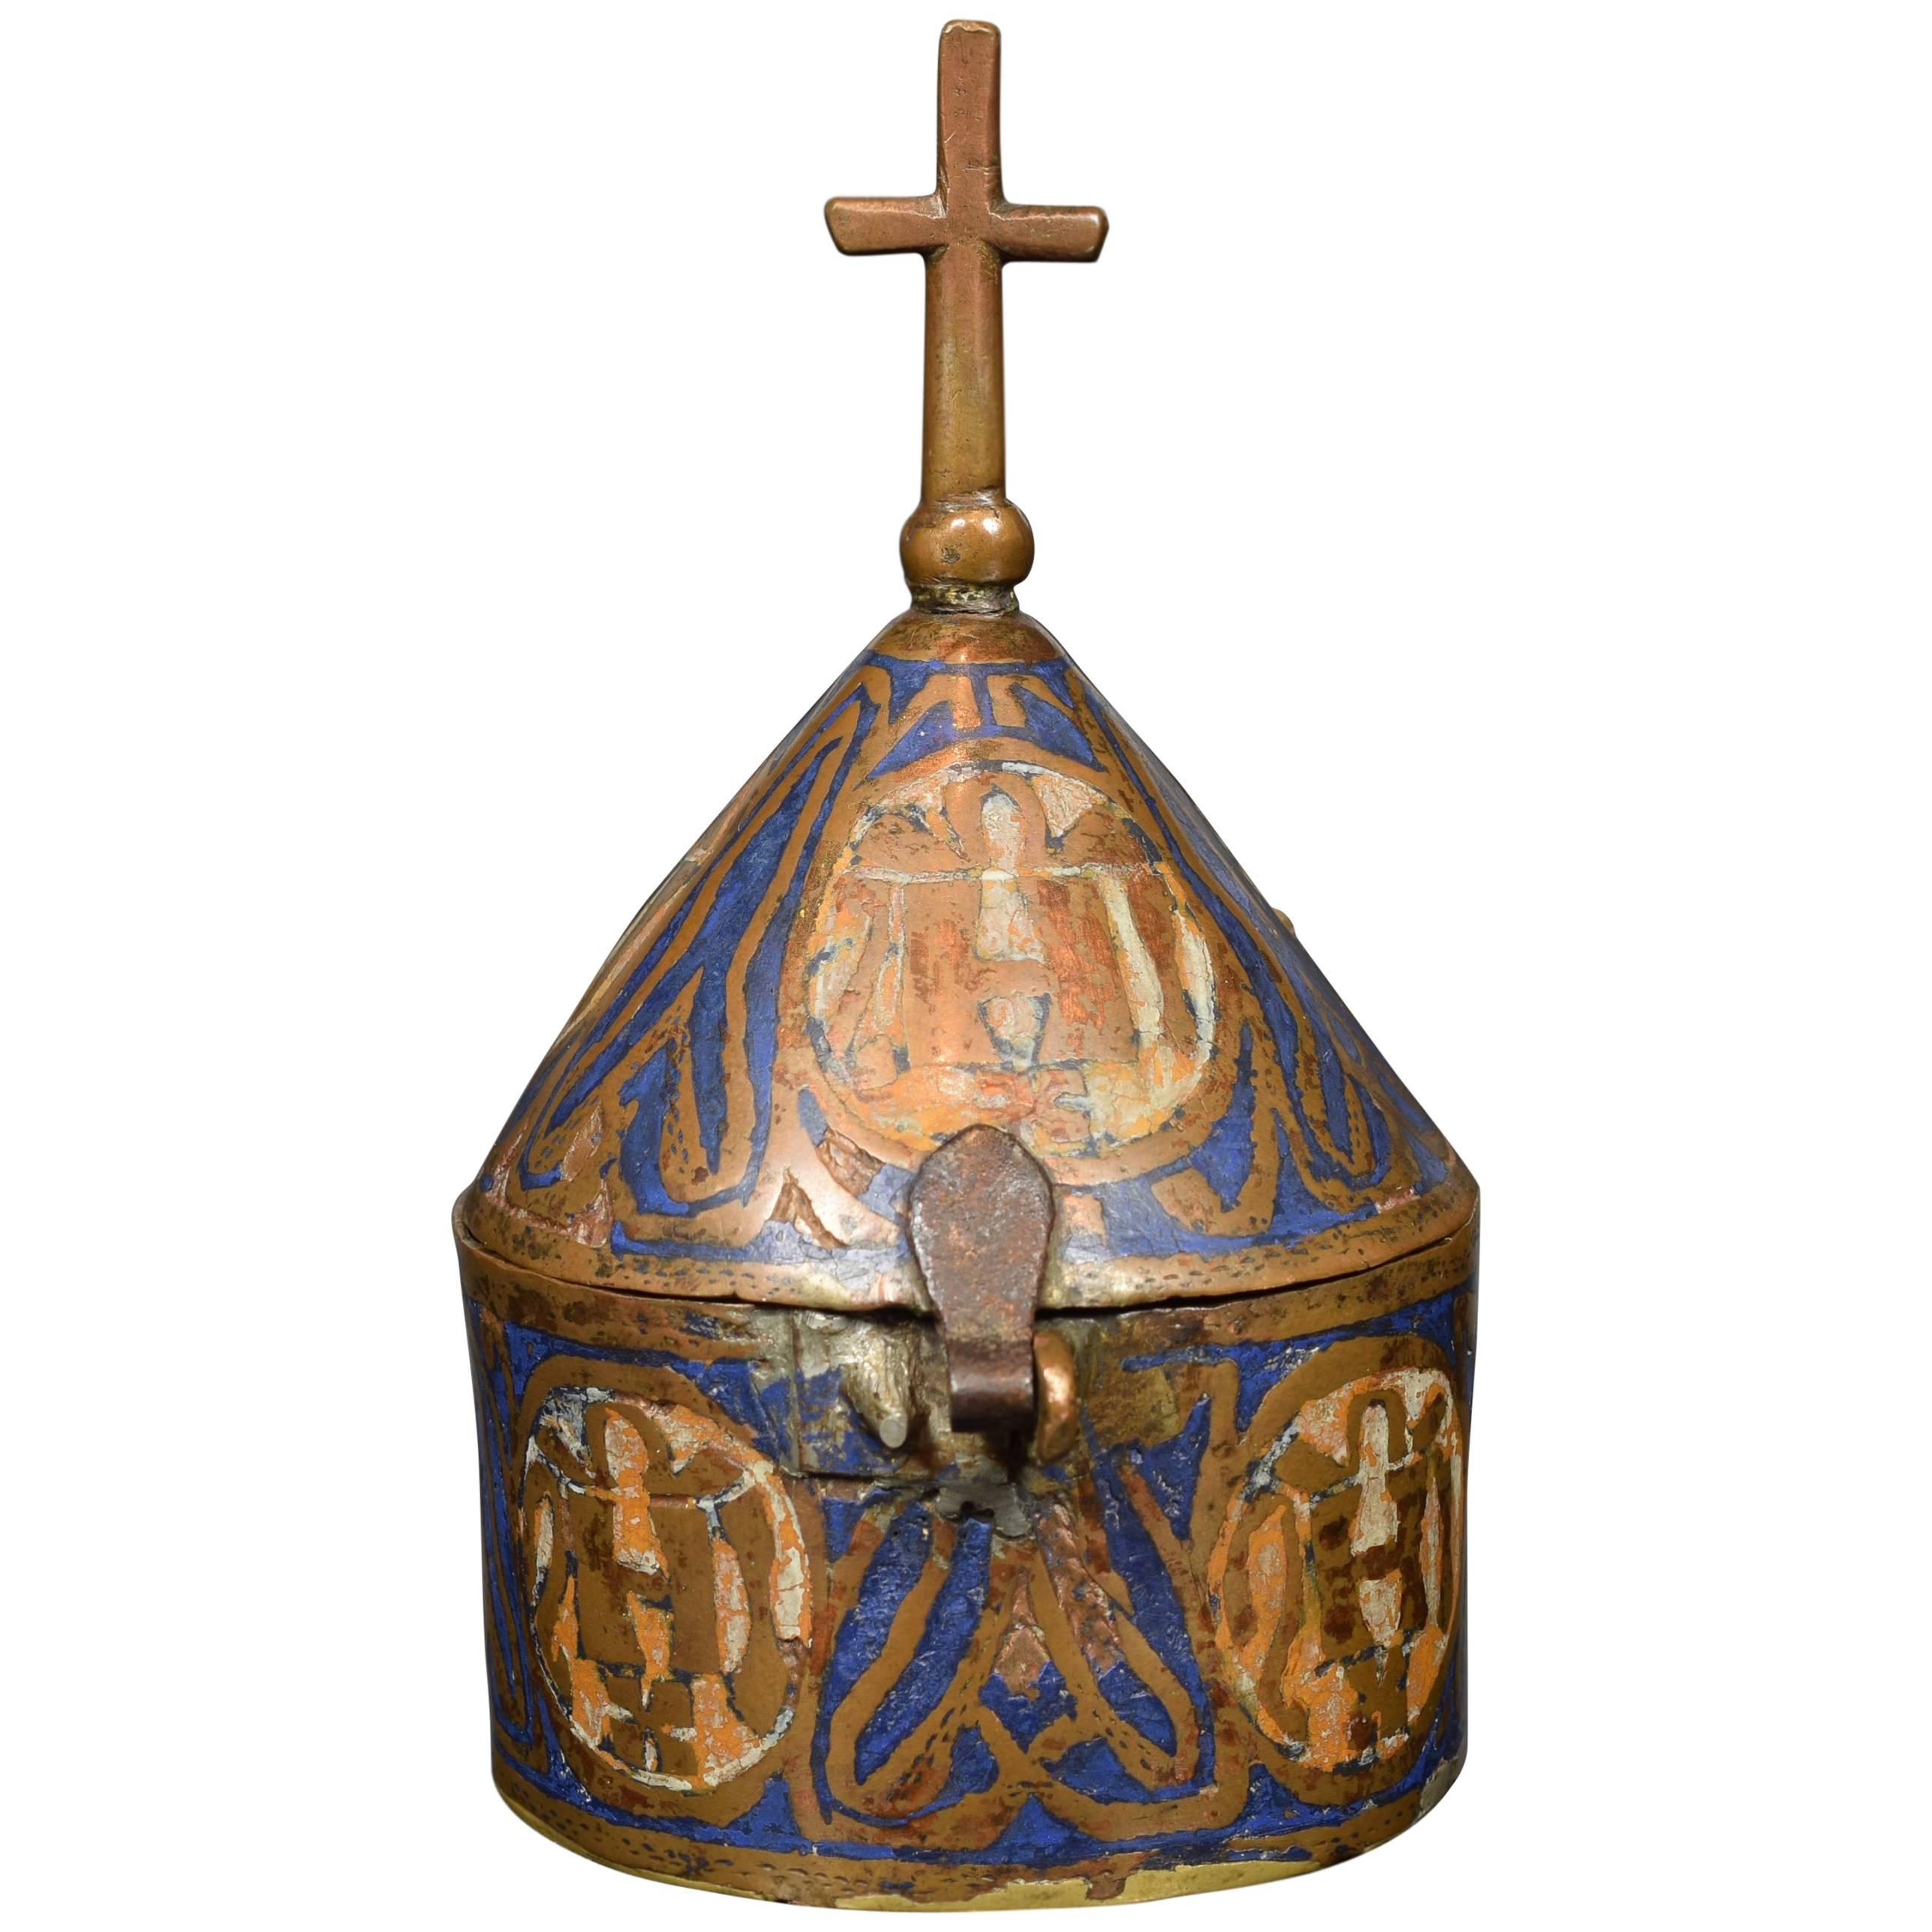 Pyx. Copper and Enamel, Limoges, France, 13th Century